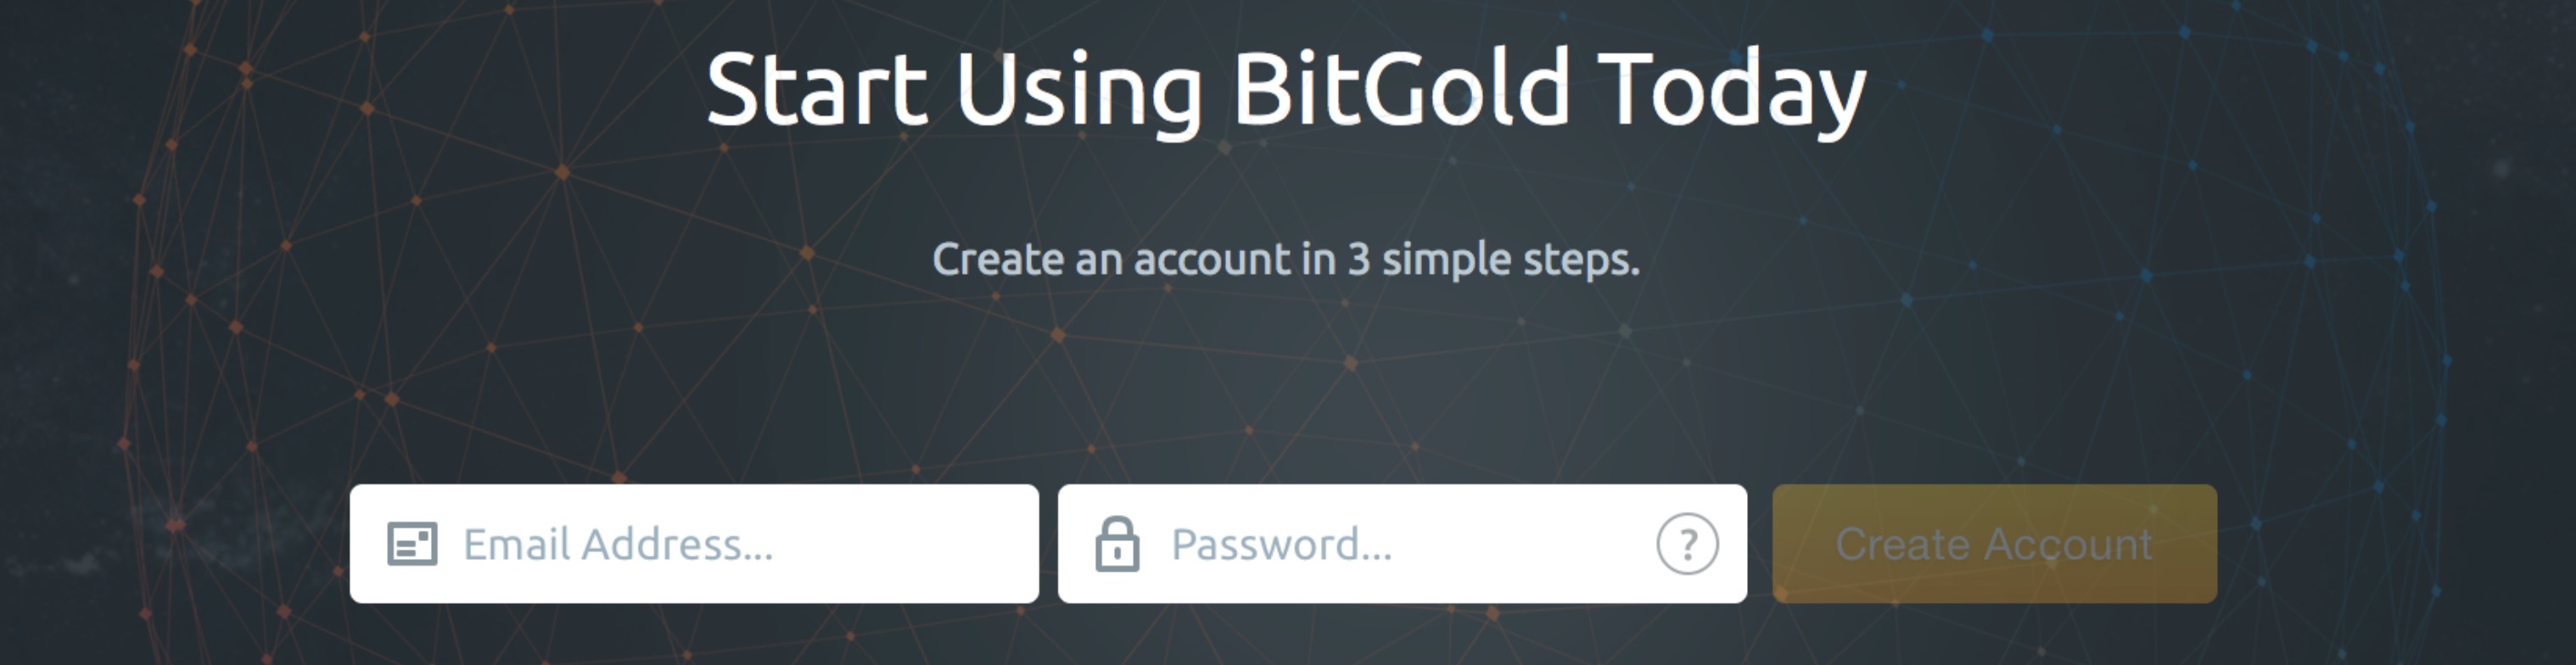 BitGold - Create Account